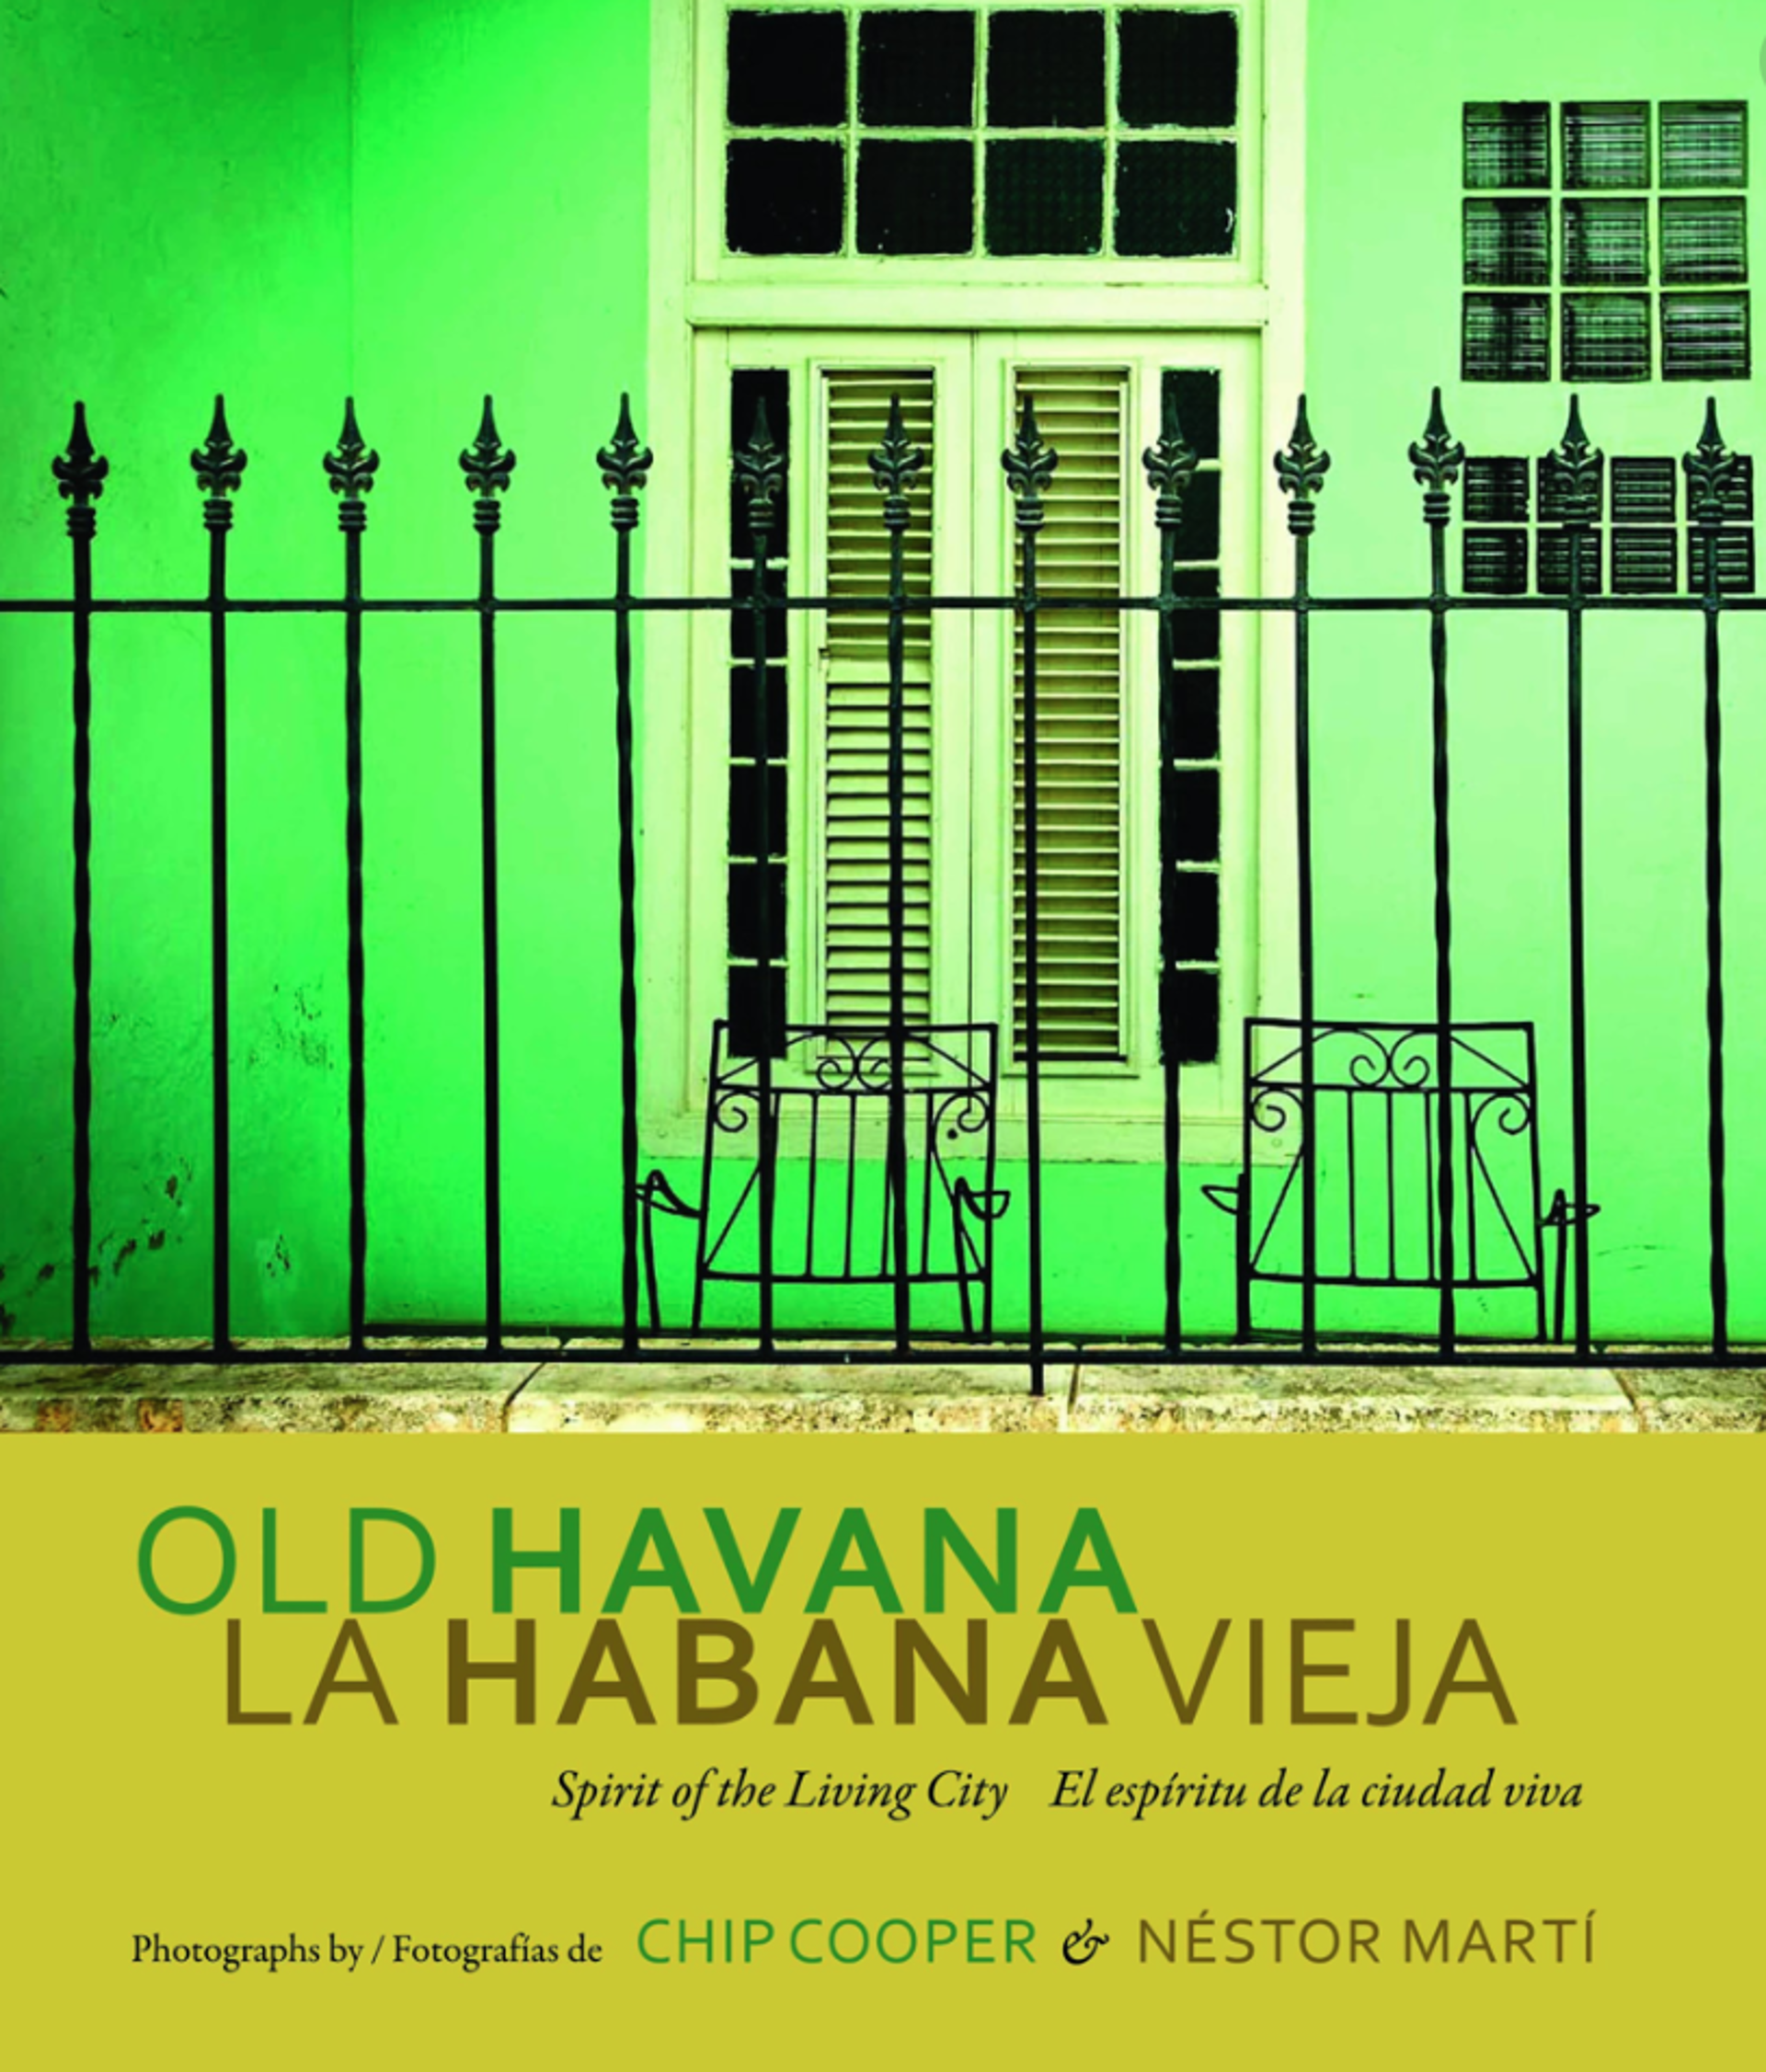 Old Havana, La Habana Vieja by Chip Cooper